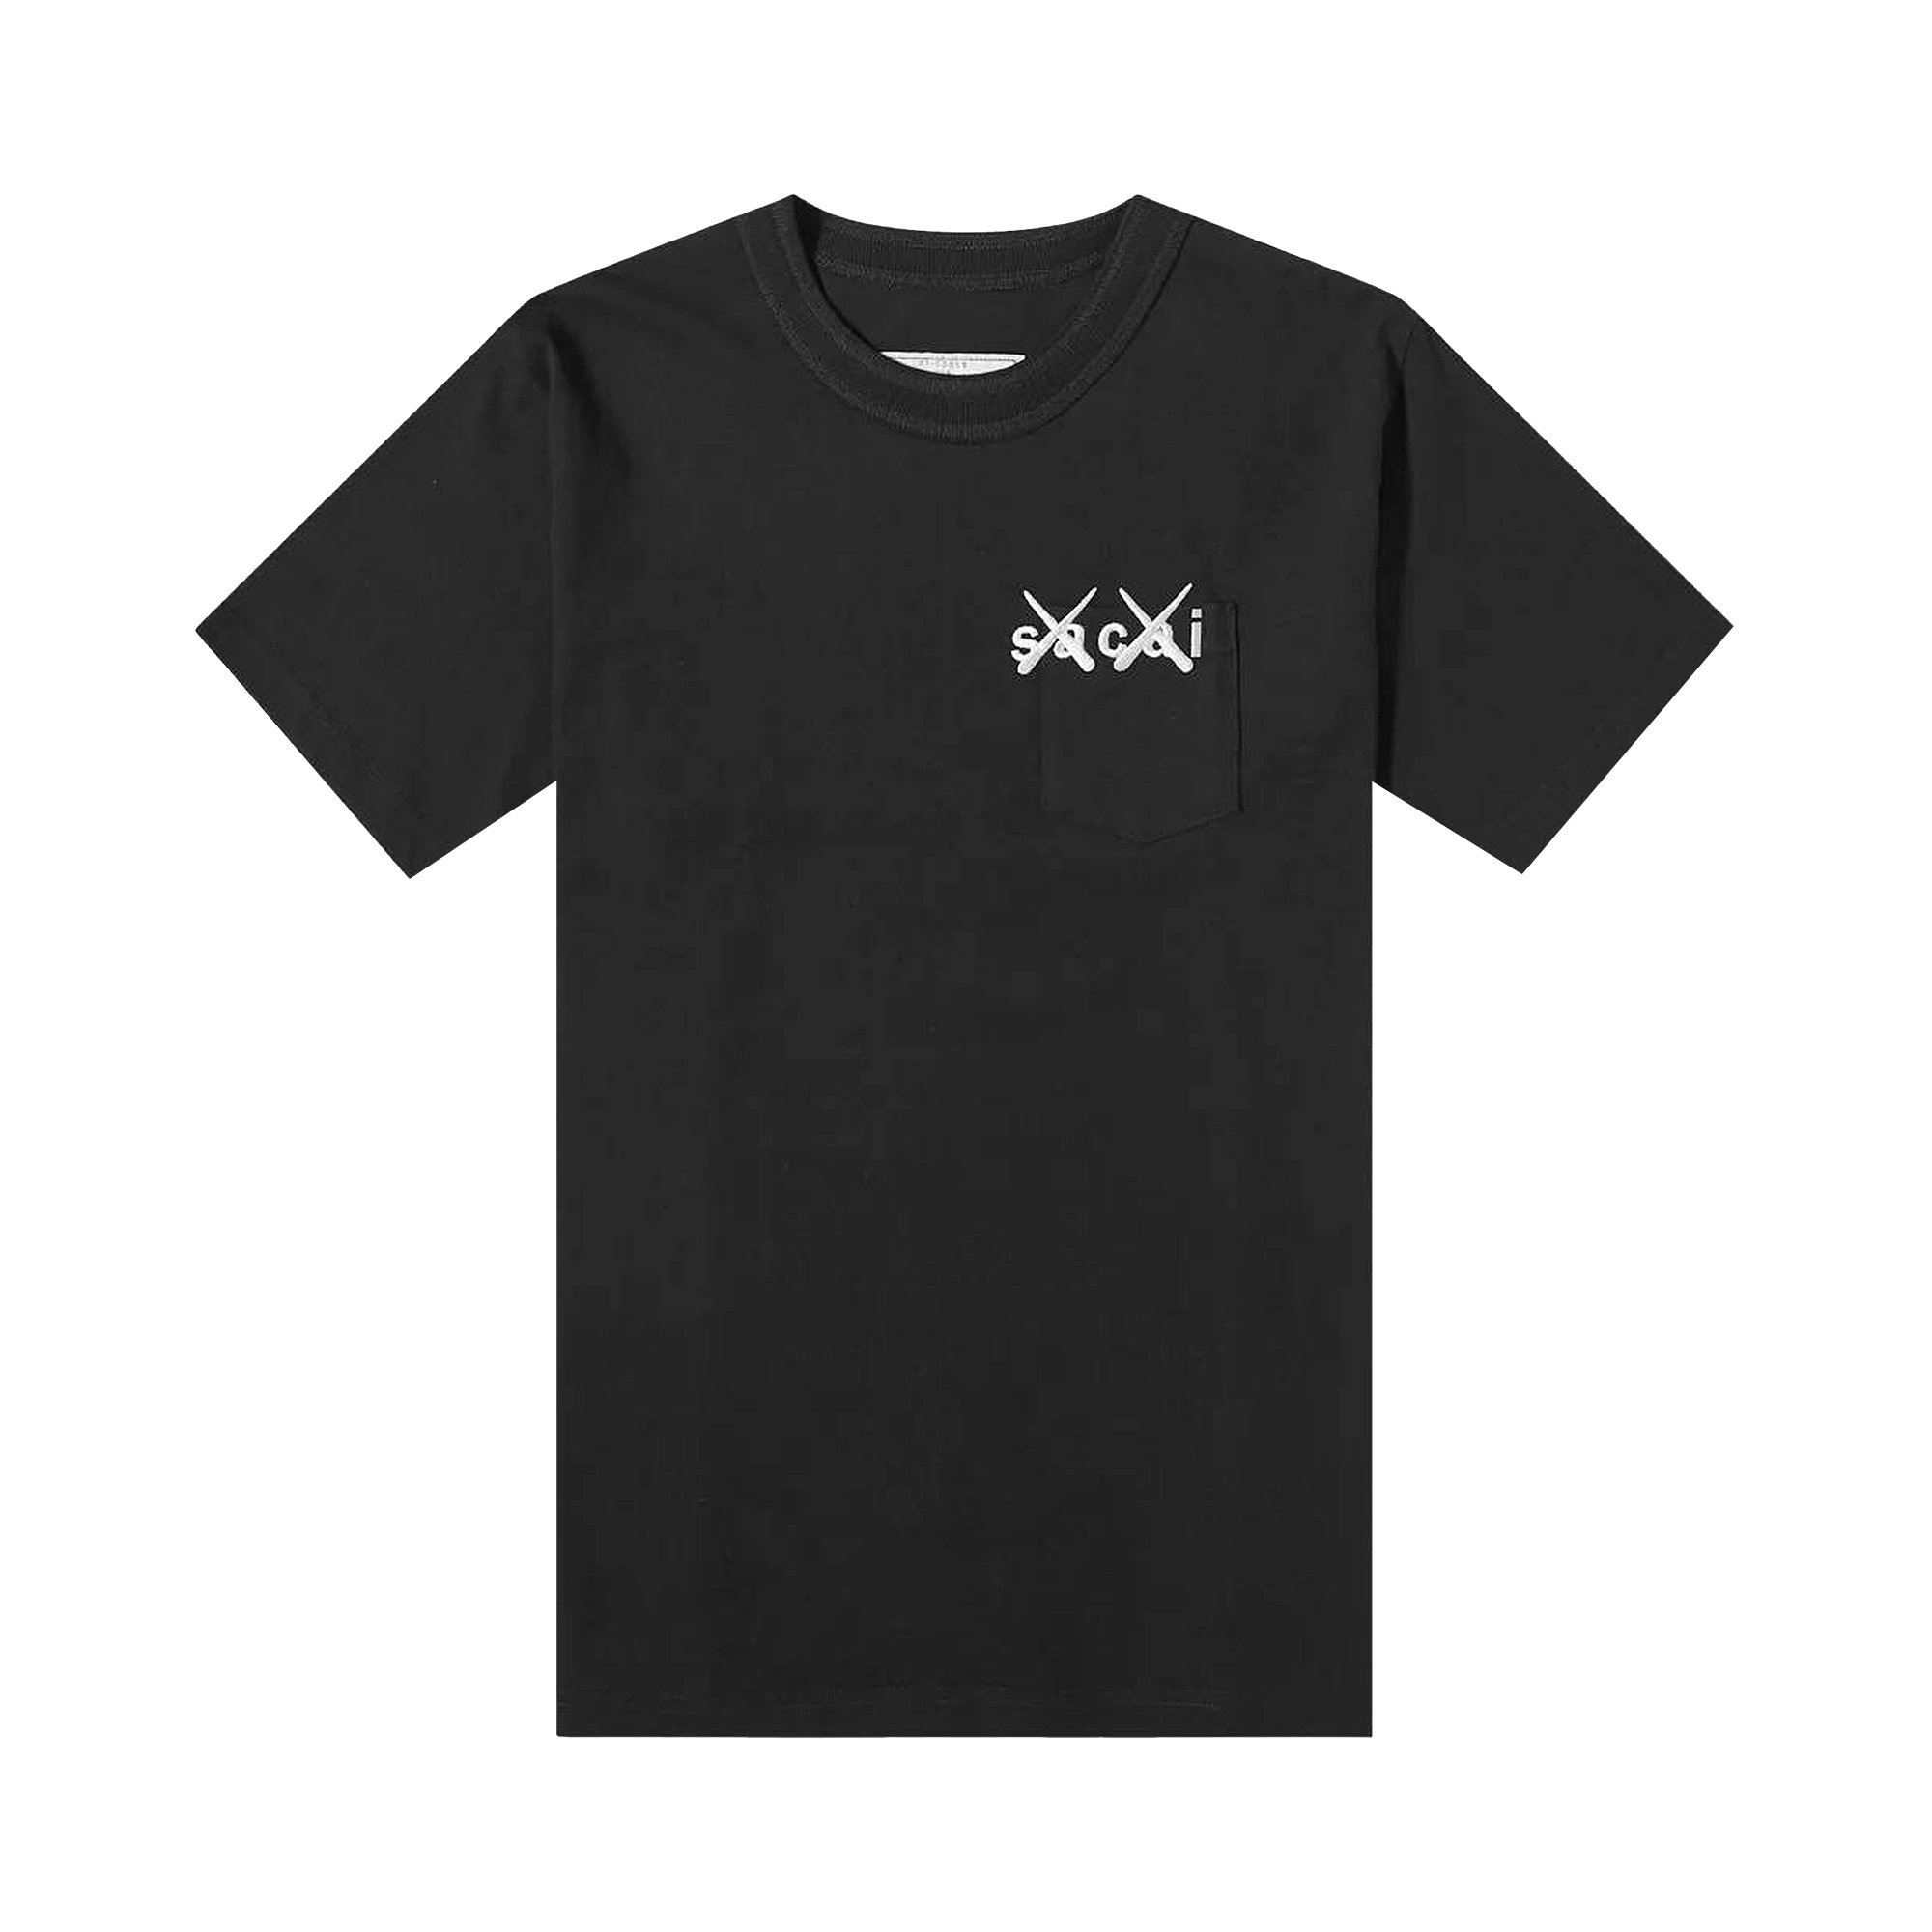 新品sacai×KAWS T-Shirt(BLACK×PURPLE)size5